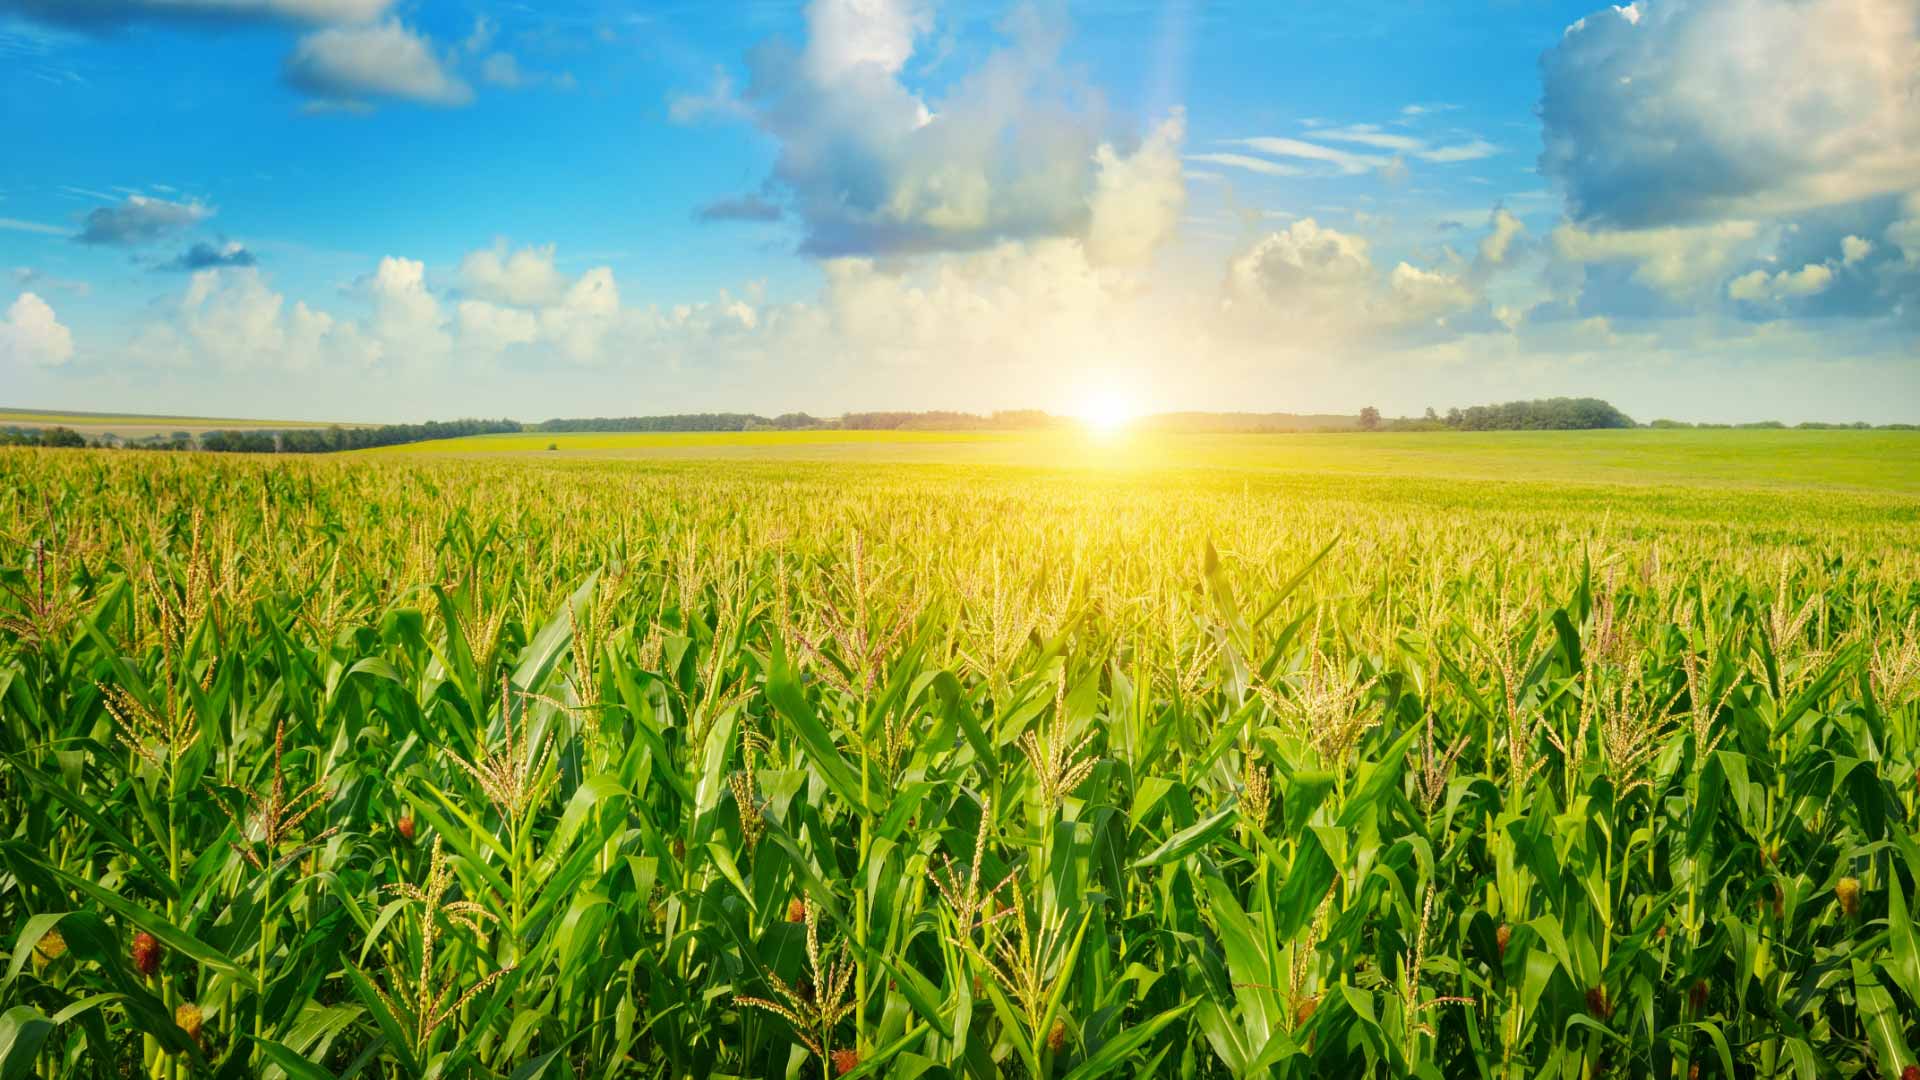 Image show a sunny cornfield